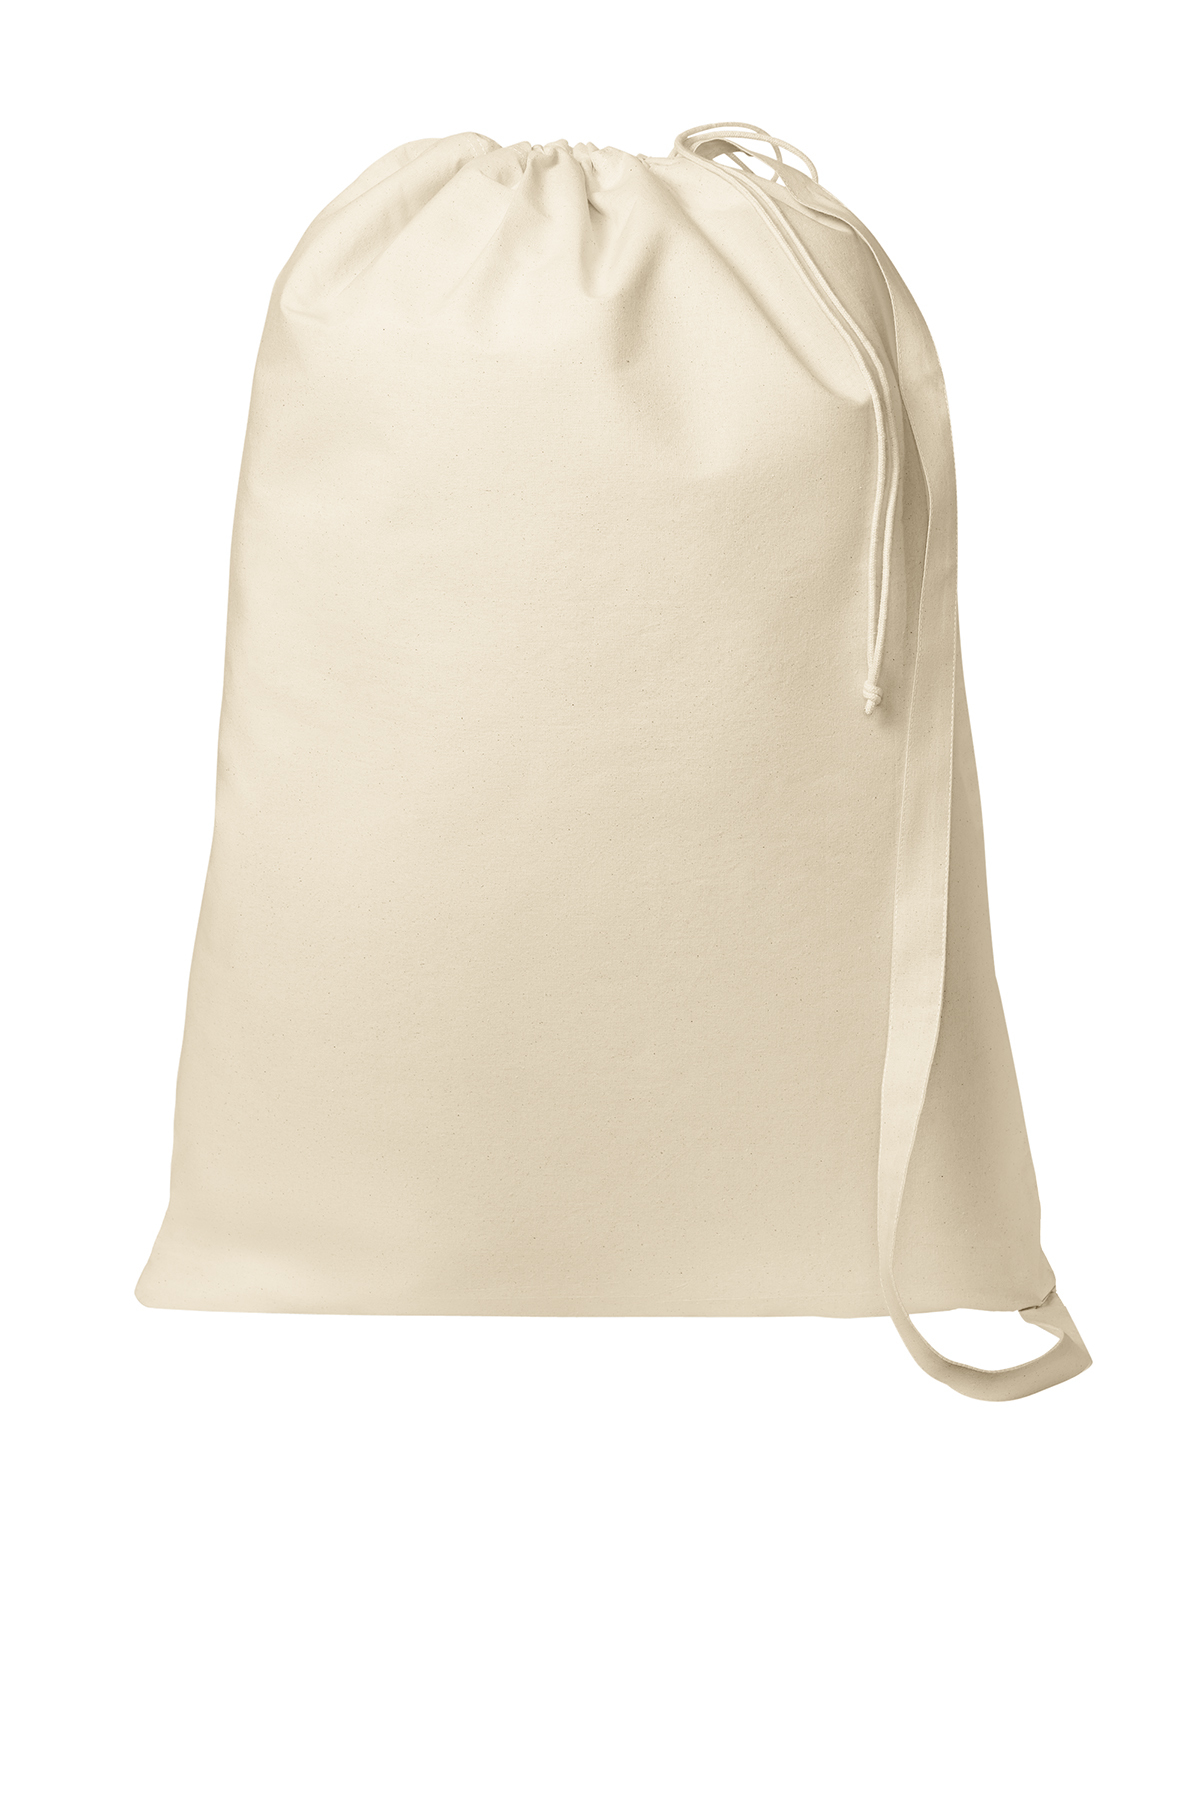 Port Authority Core Cotton Laundry Bag, Product